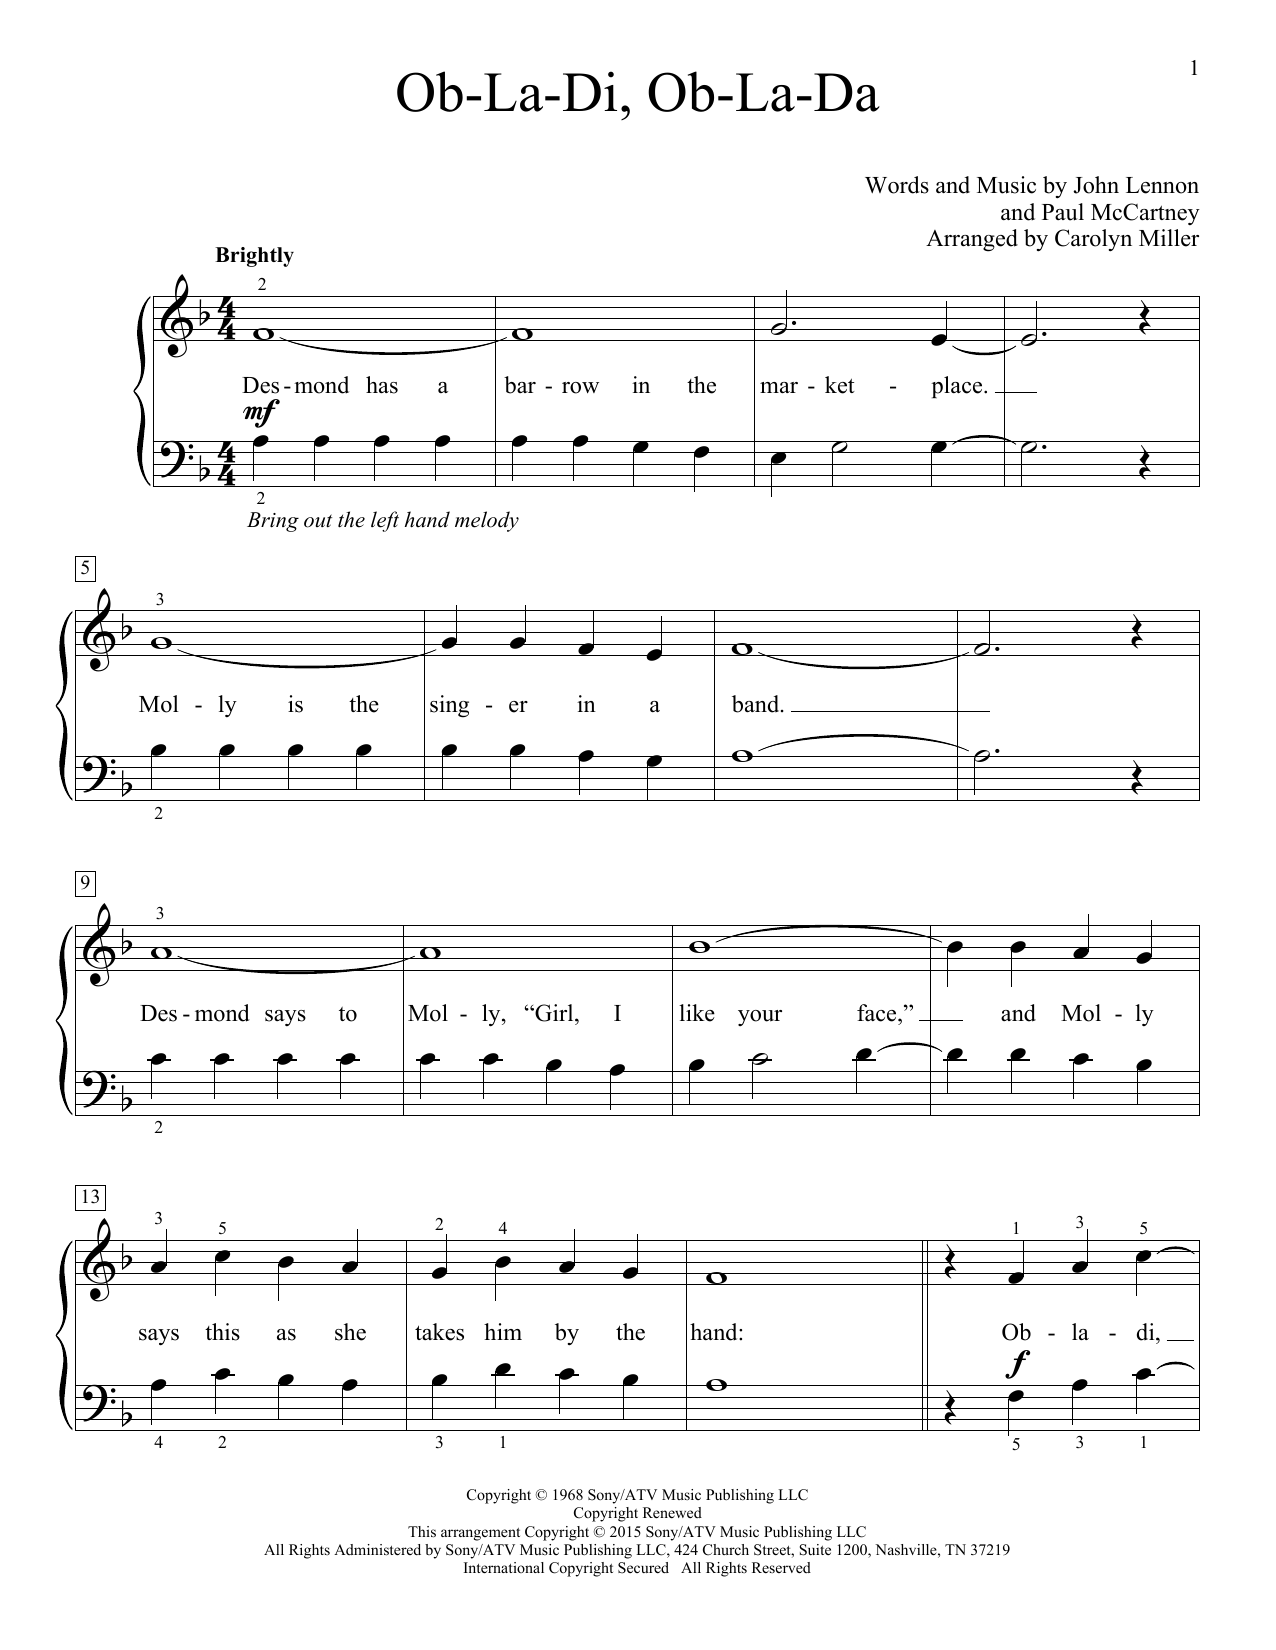 The Beatles Ob-La-Di, Ob-La-Da (arr. Carolyn Miller) sheet music notes and chords arranged for Educational Piano